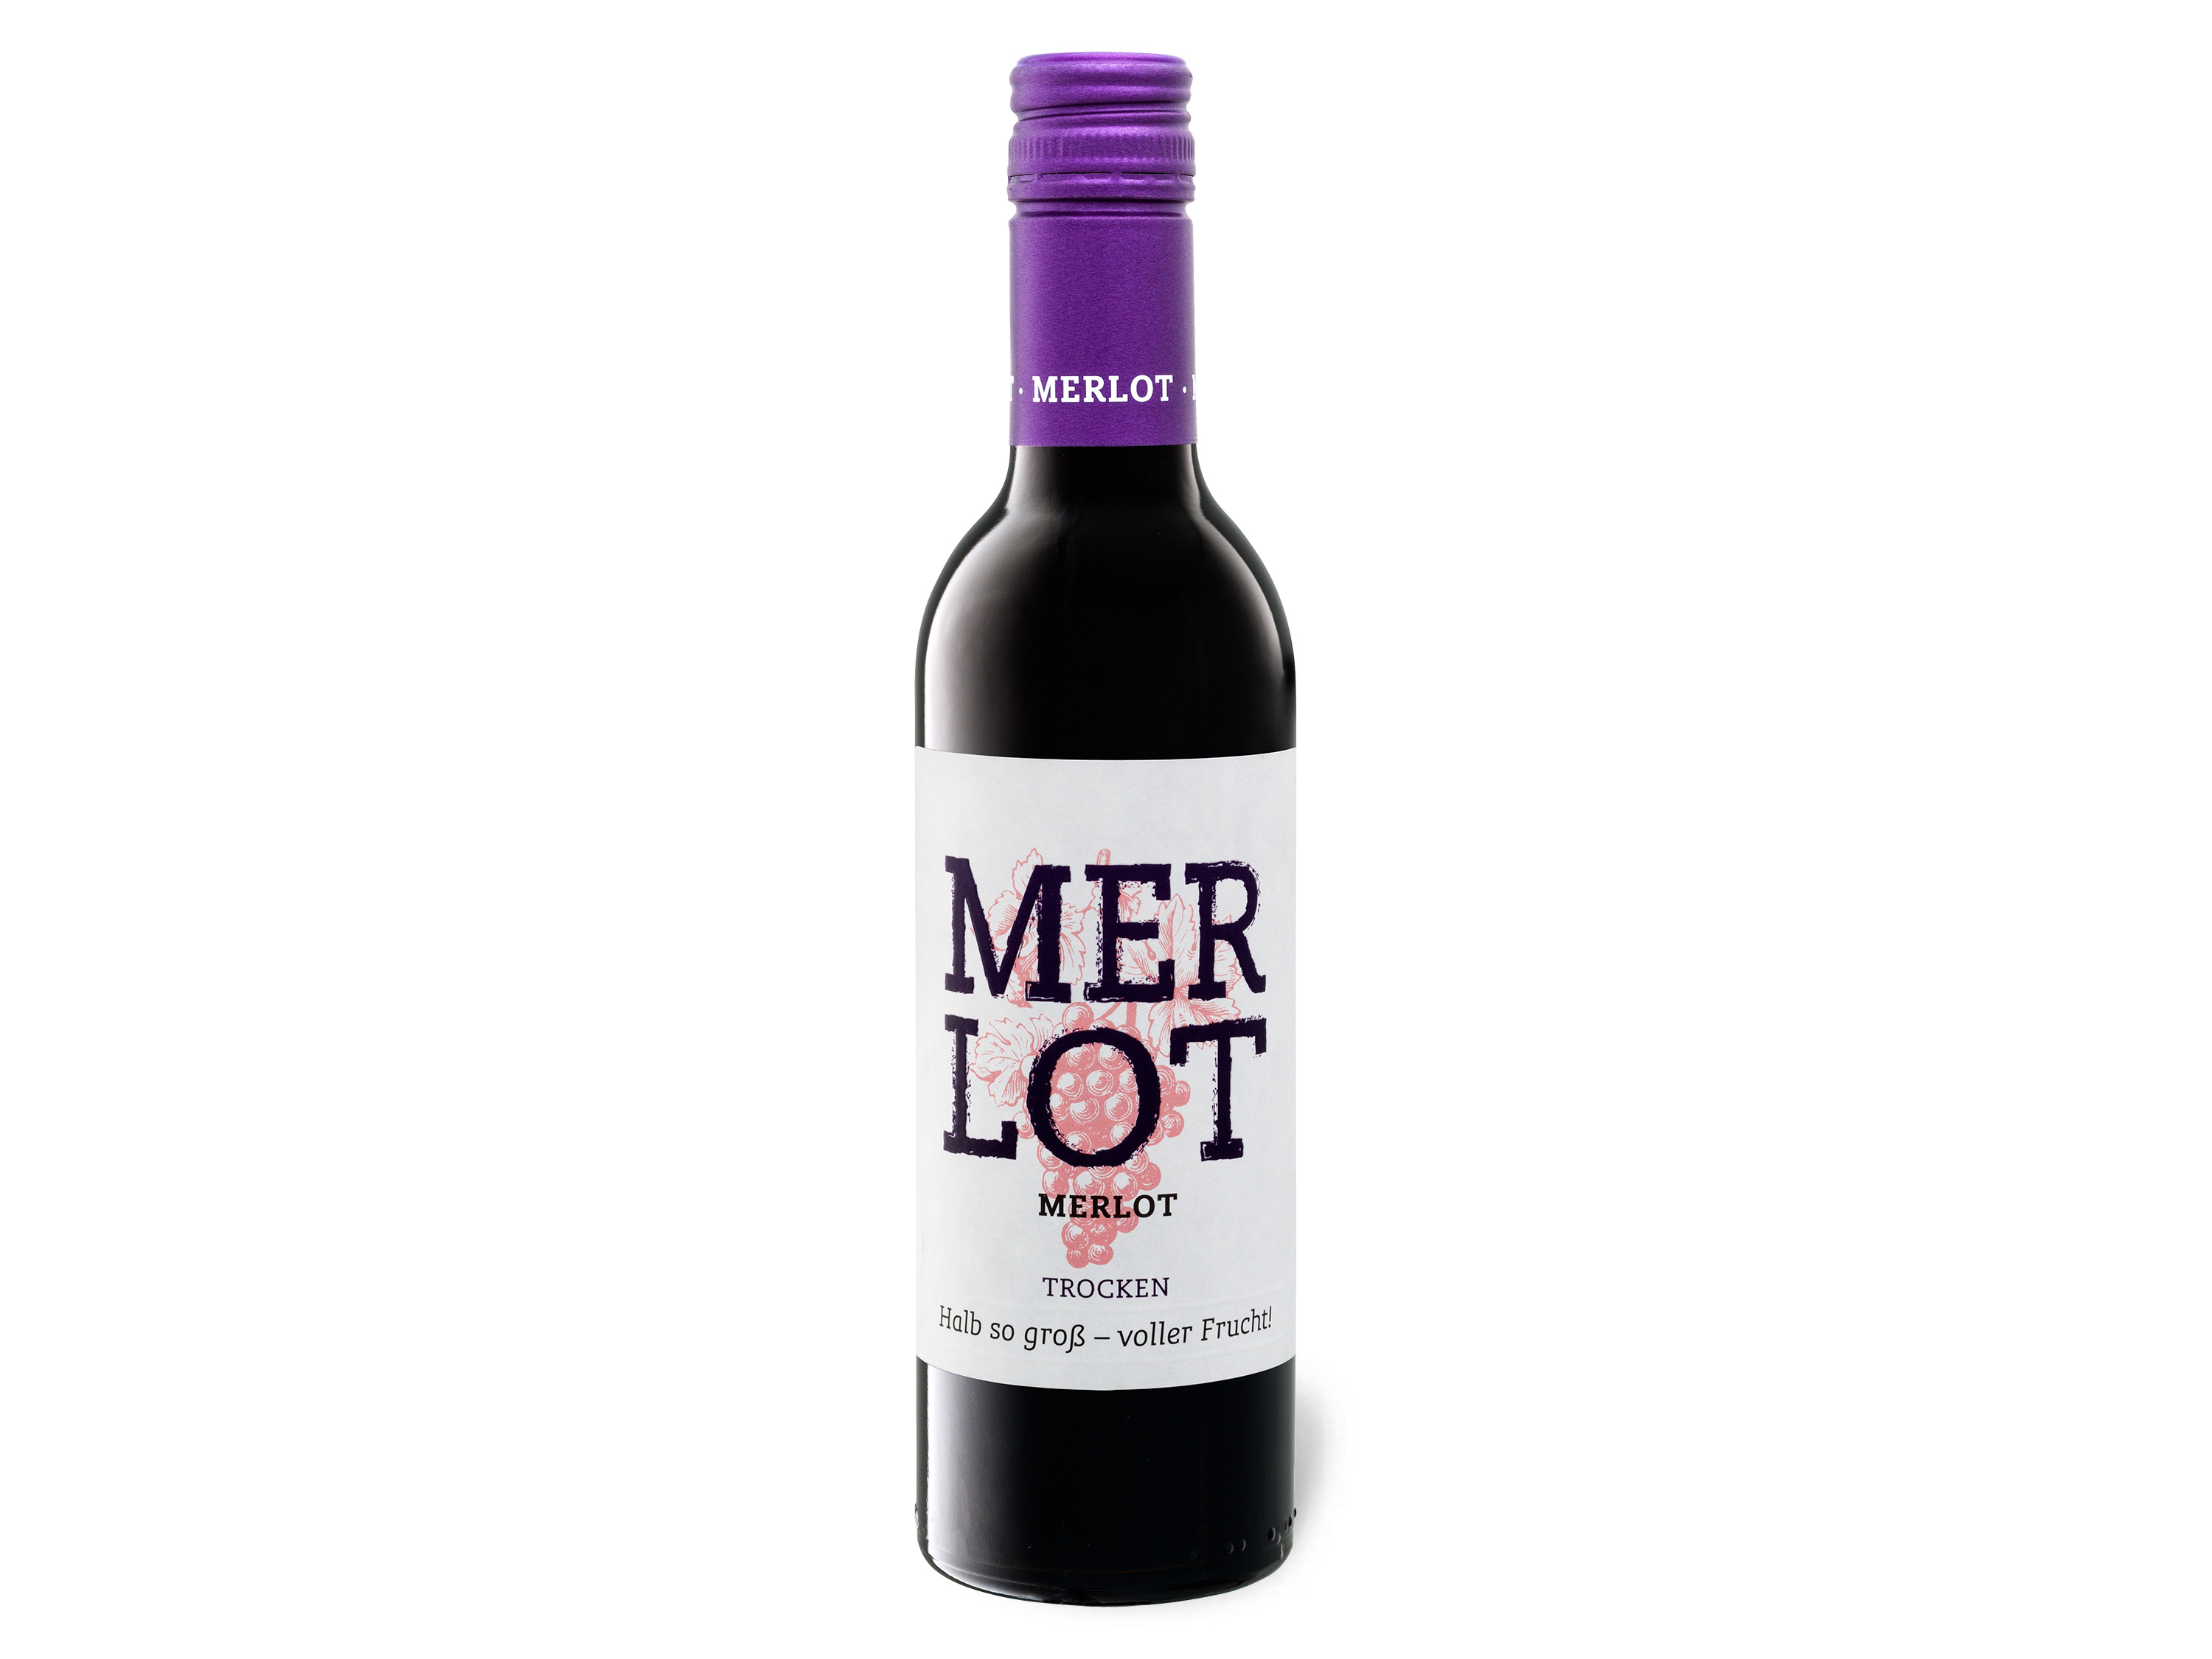 Merlot trocken vegan 0,375-l, Rotwein 2020 Wein & Spirituosen Lidl DE